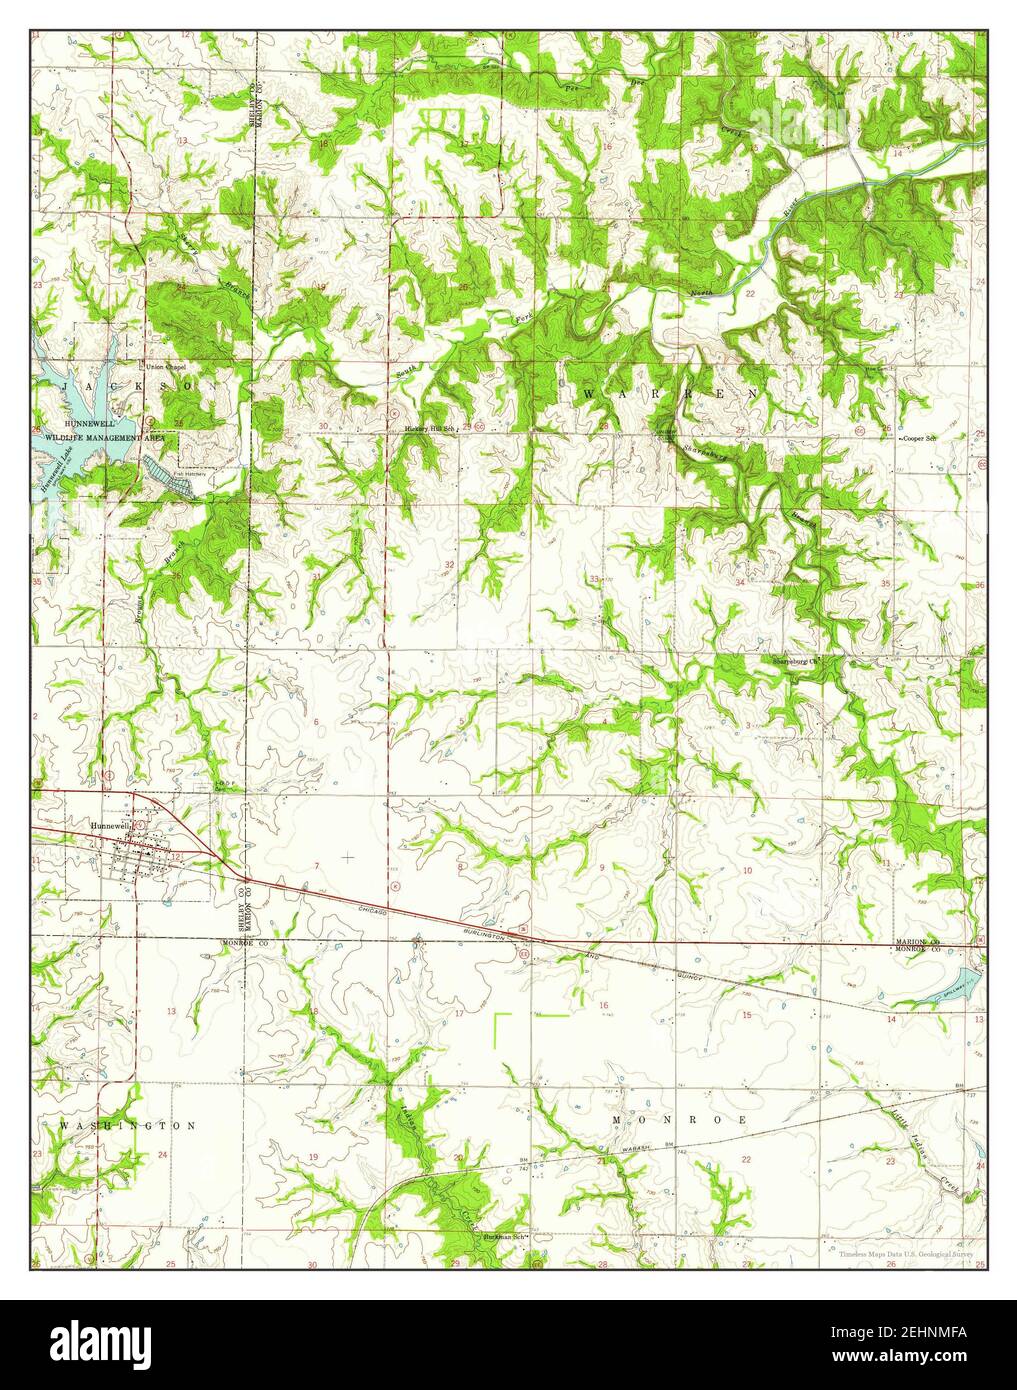 Hunnewell, Missouri, map 1959, 1:24000, United States of America by Timeless Maps, data U.S. Geological Survey Stock Photo